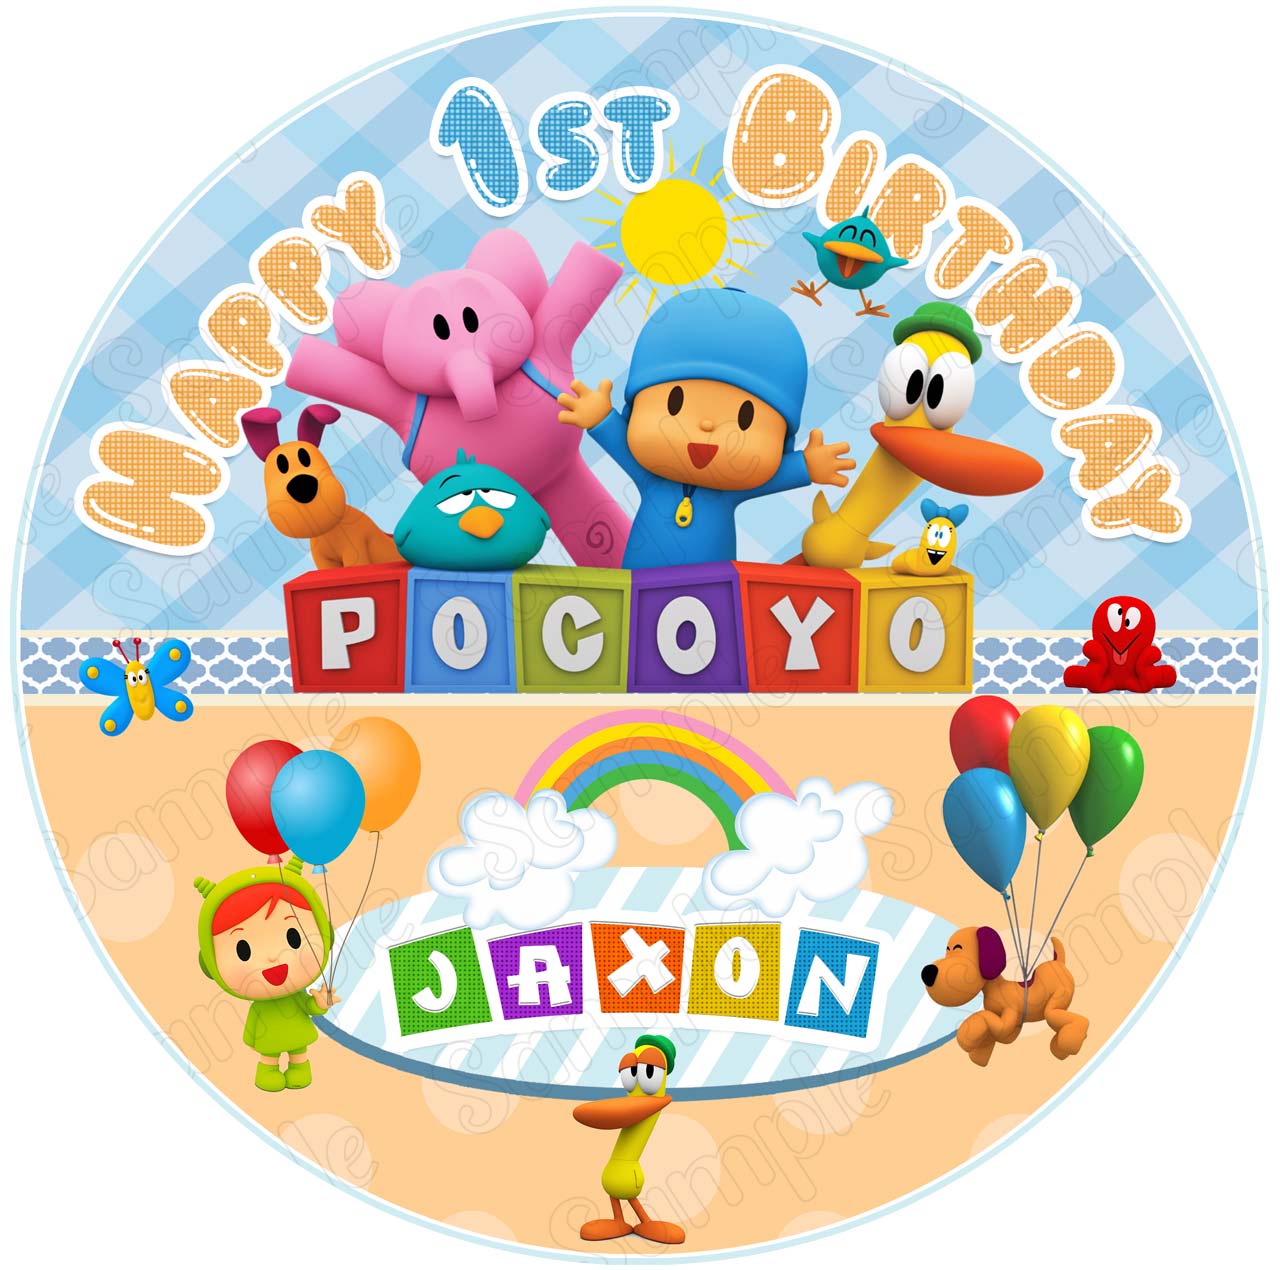 Pocoyo Party | Childrens birthday cakes, Birthday cake, Party cakes